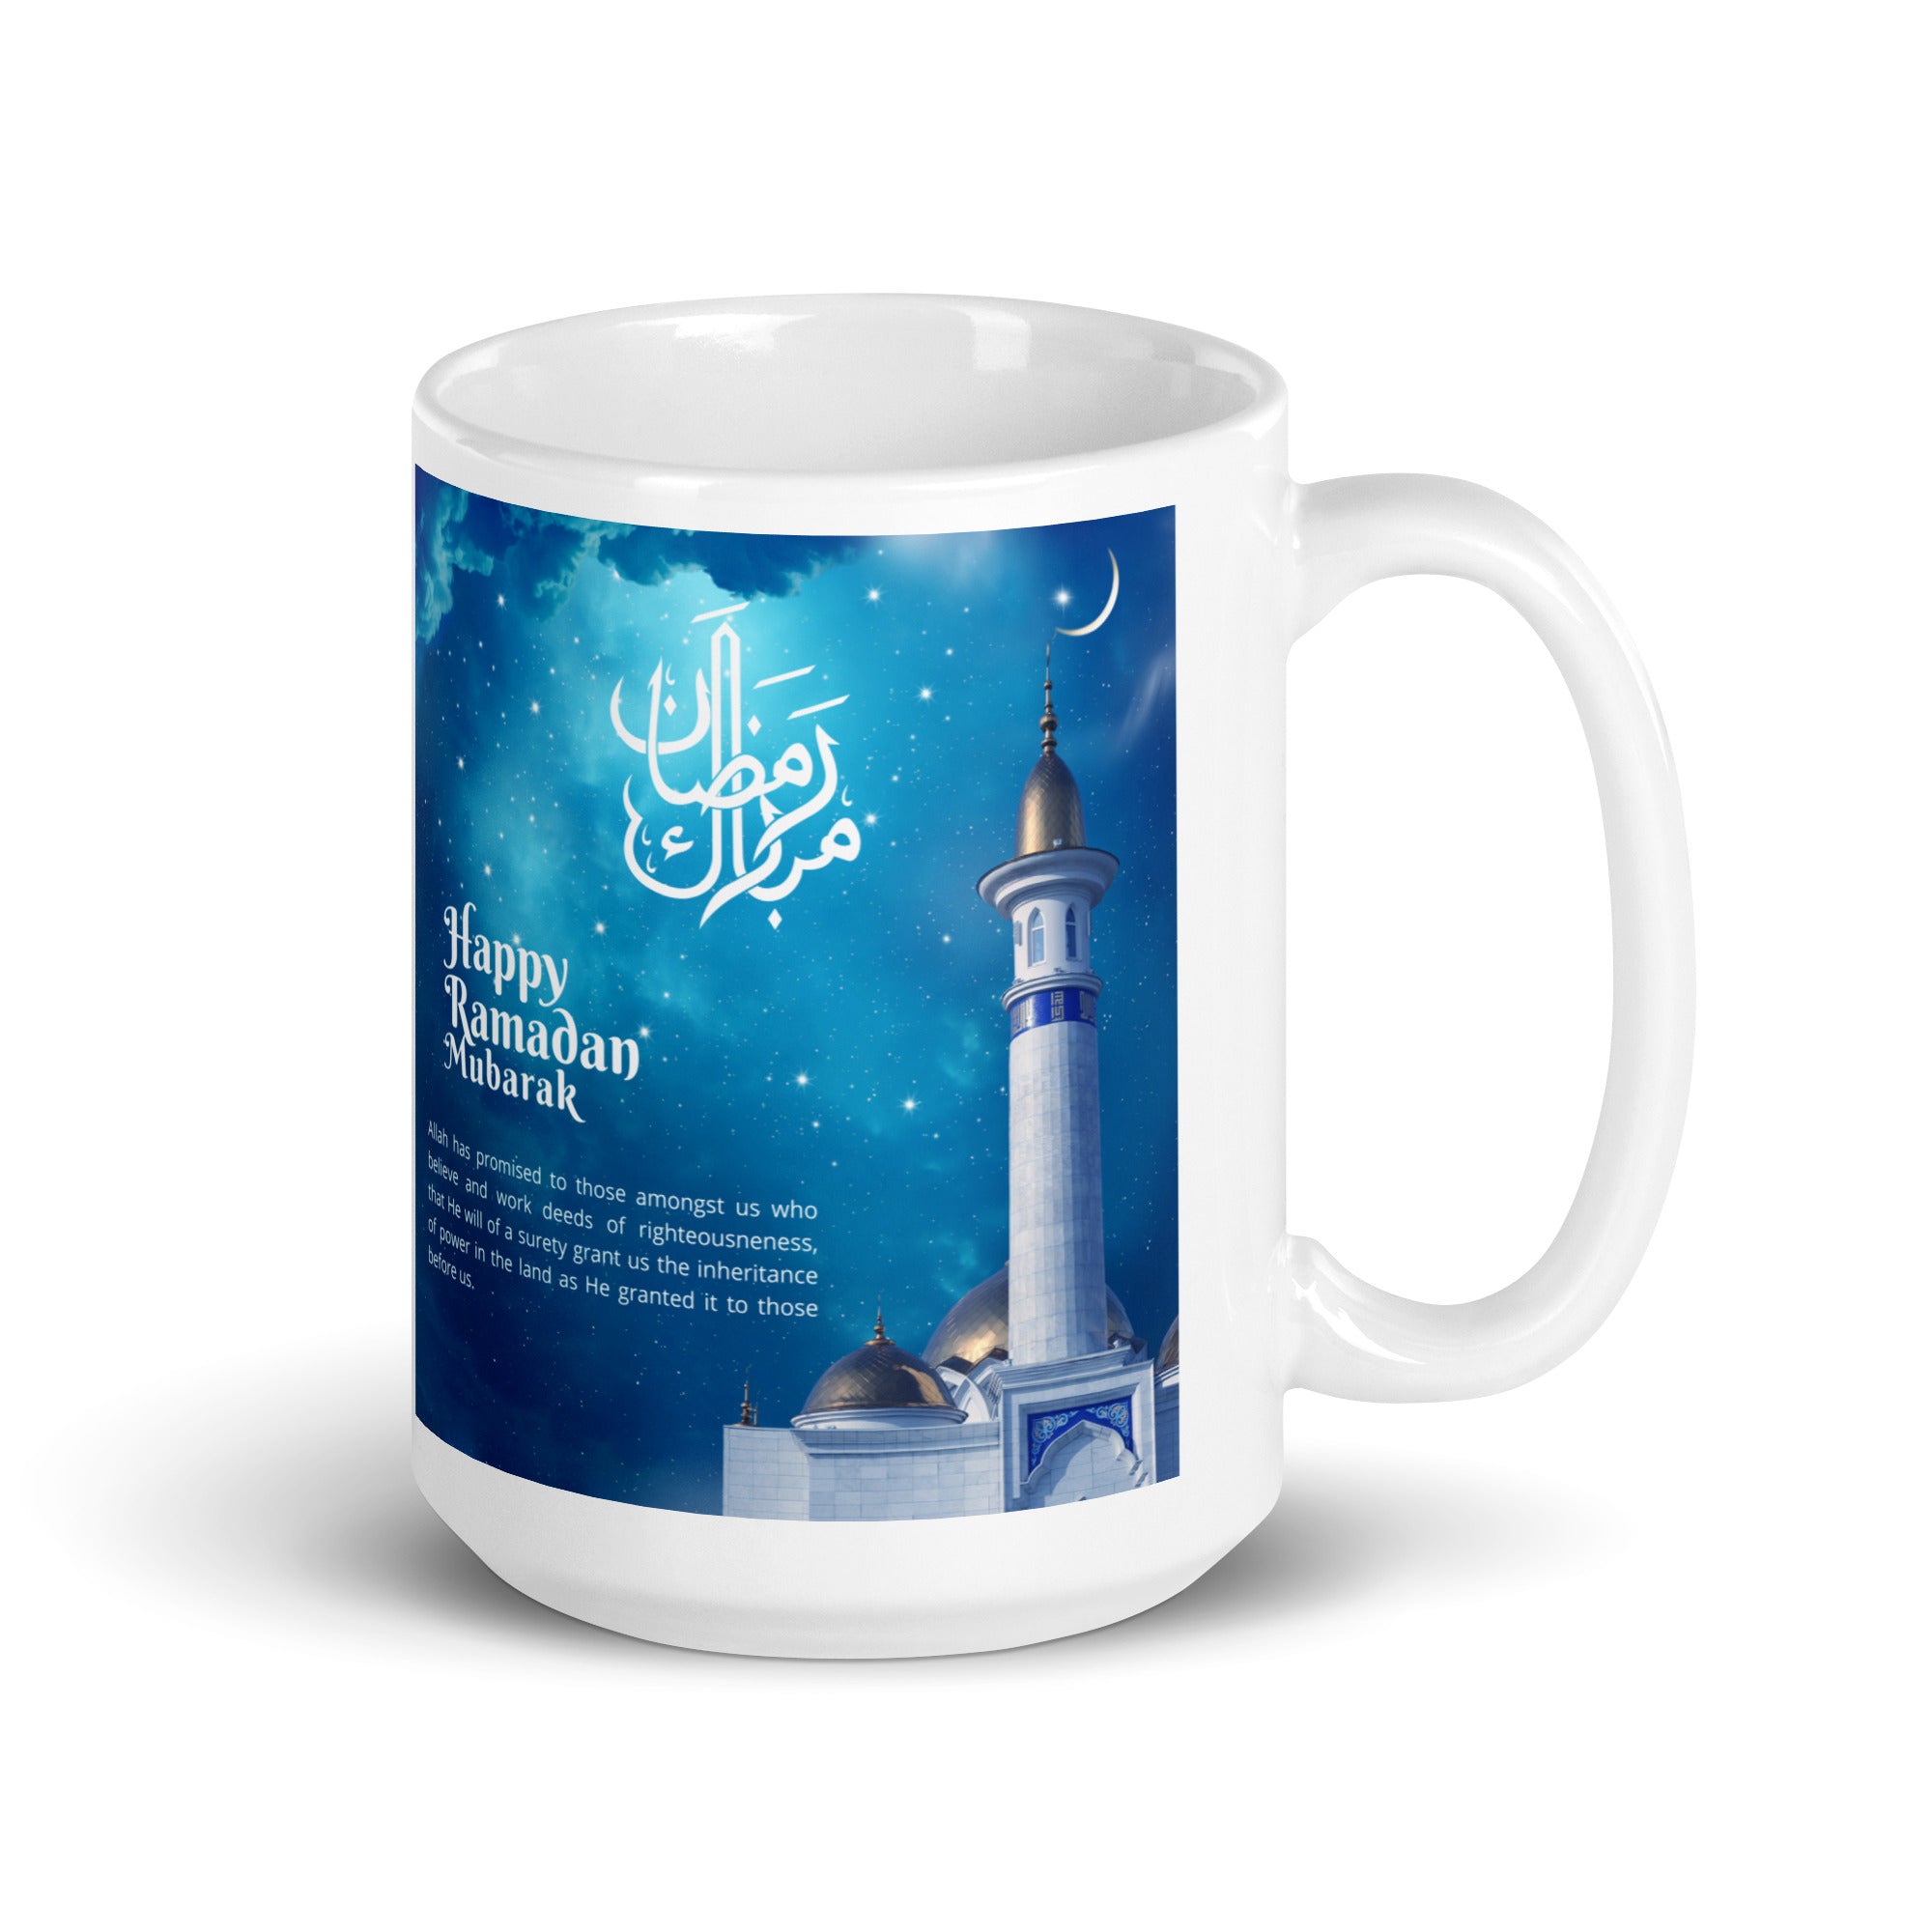 Happy Ramadan Mubarak White Glossy Mug